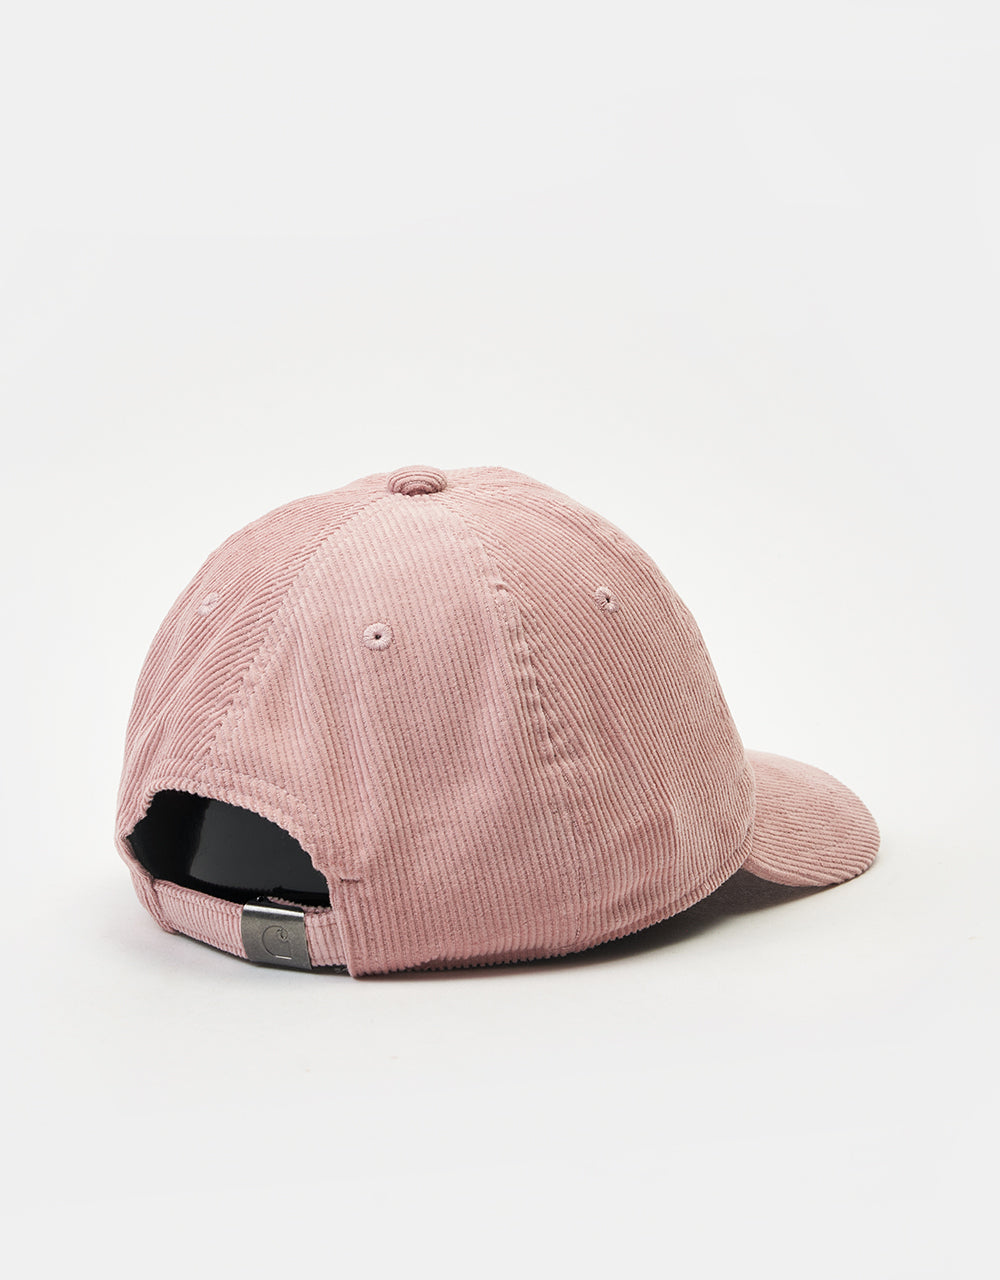 Carhartt WIP Harlem Cap - Glassy Pink